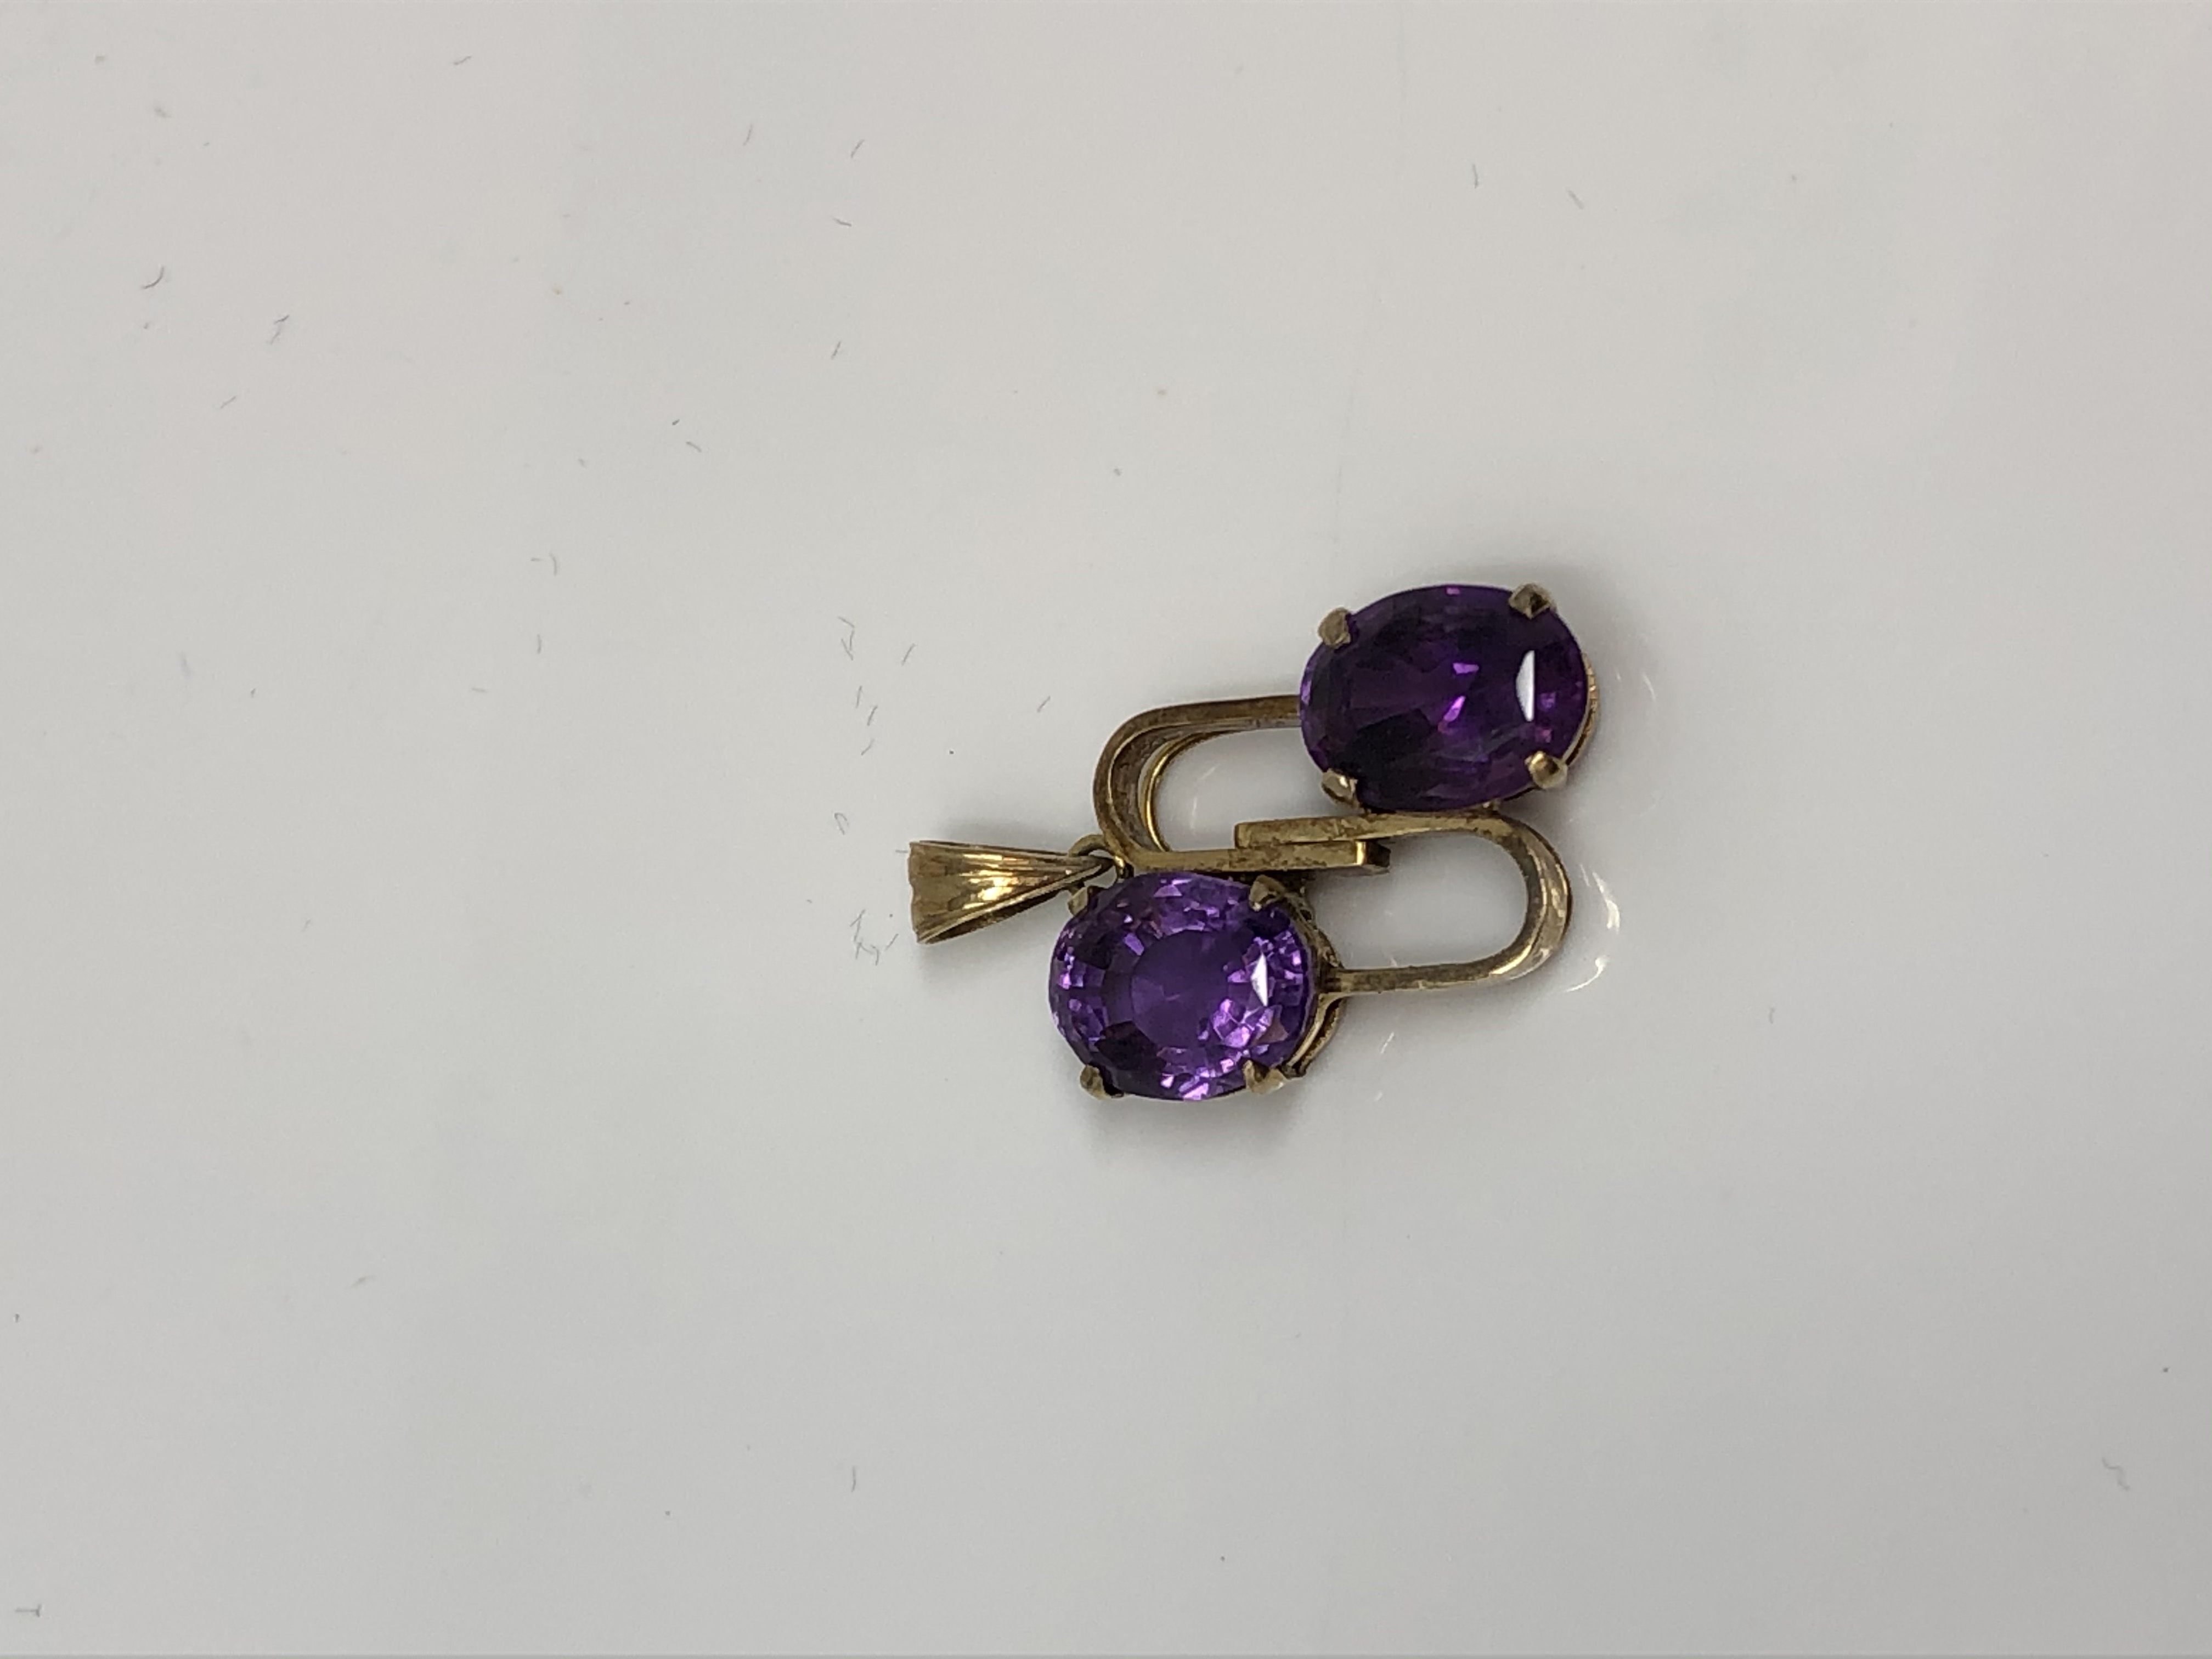 A 9ct gold amethyst set pendant